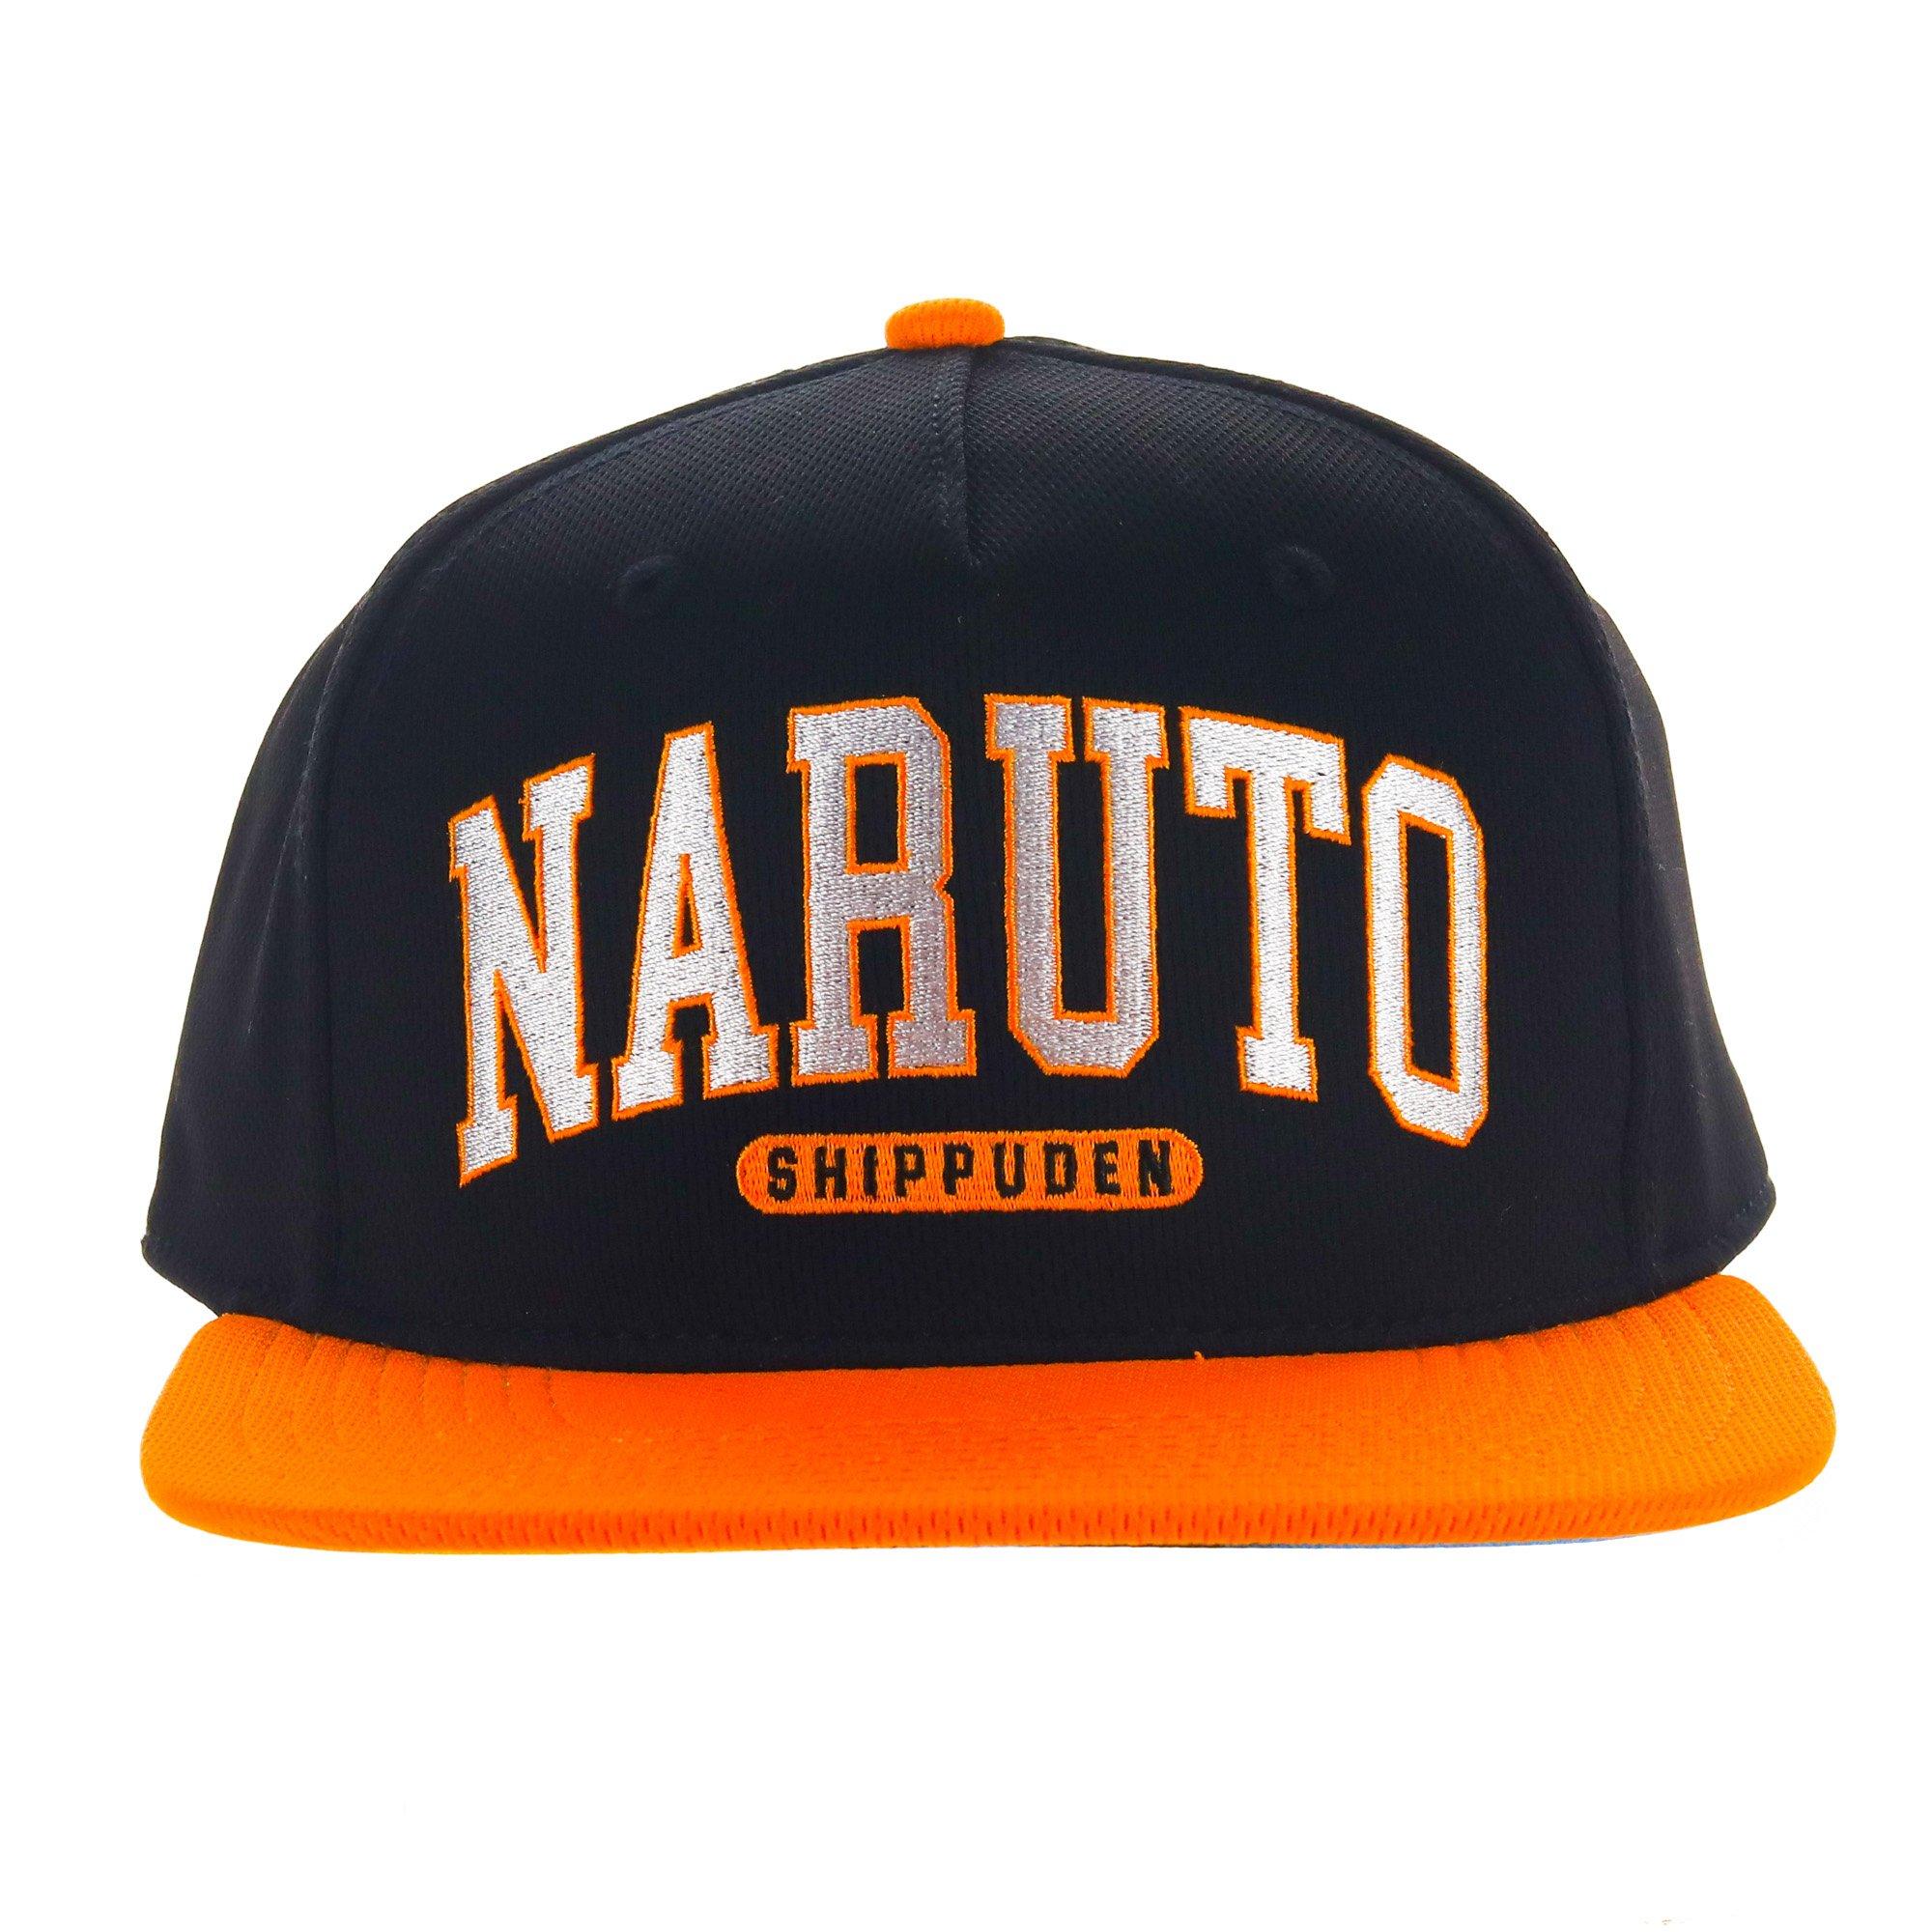 Download Naruto Shippuden Collegiate Baseball Cap Gamestop